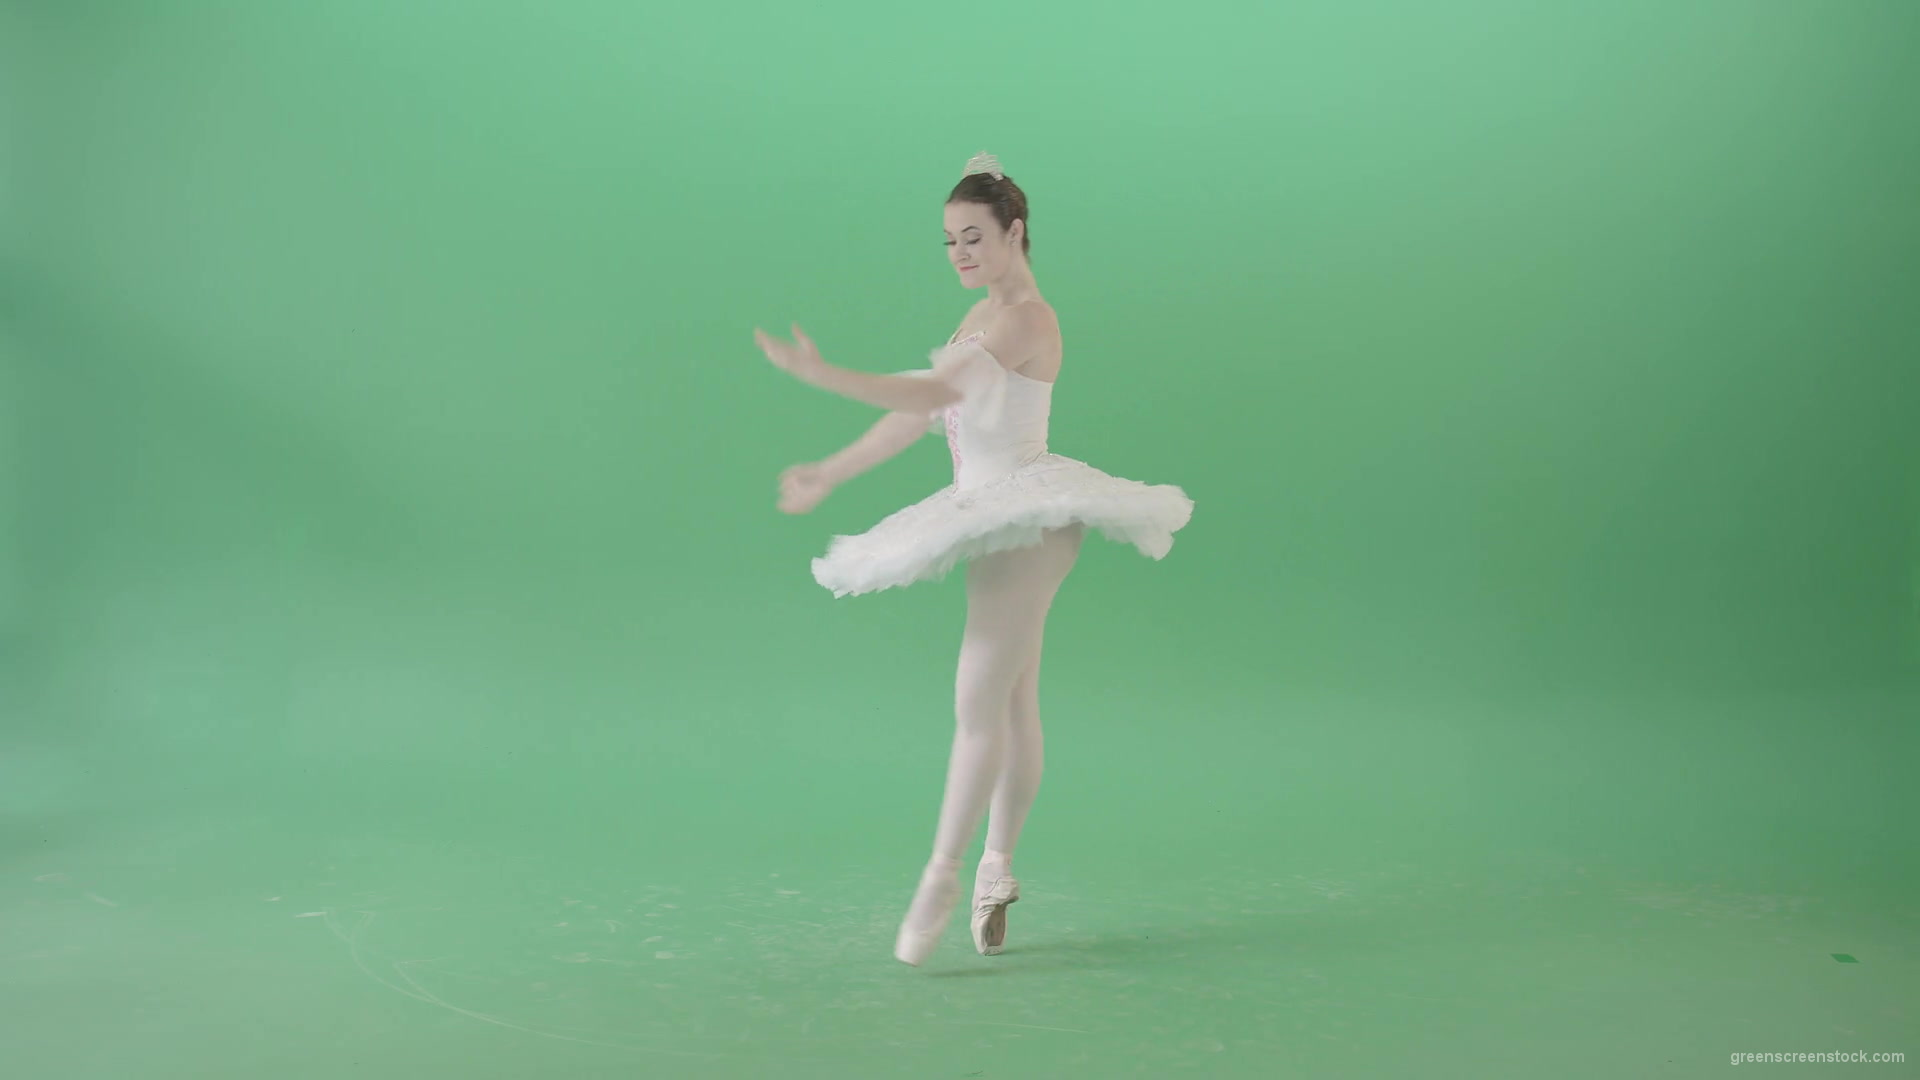 Girl-in-ballet-white-dress-performs-in-green-screen-studio-spinning-elegant-4K-Video-Footage-1920_008 Green Screen Stock